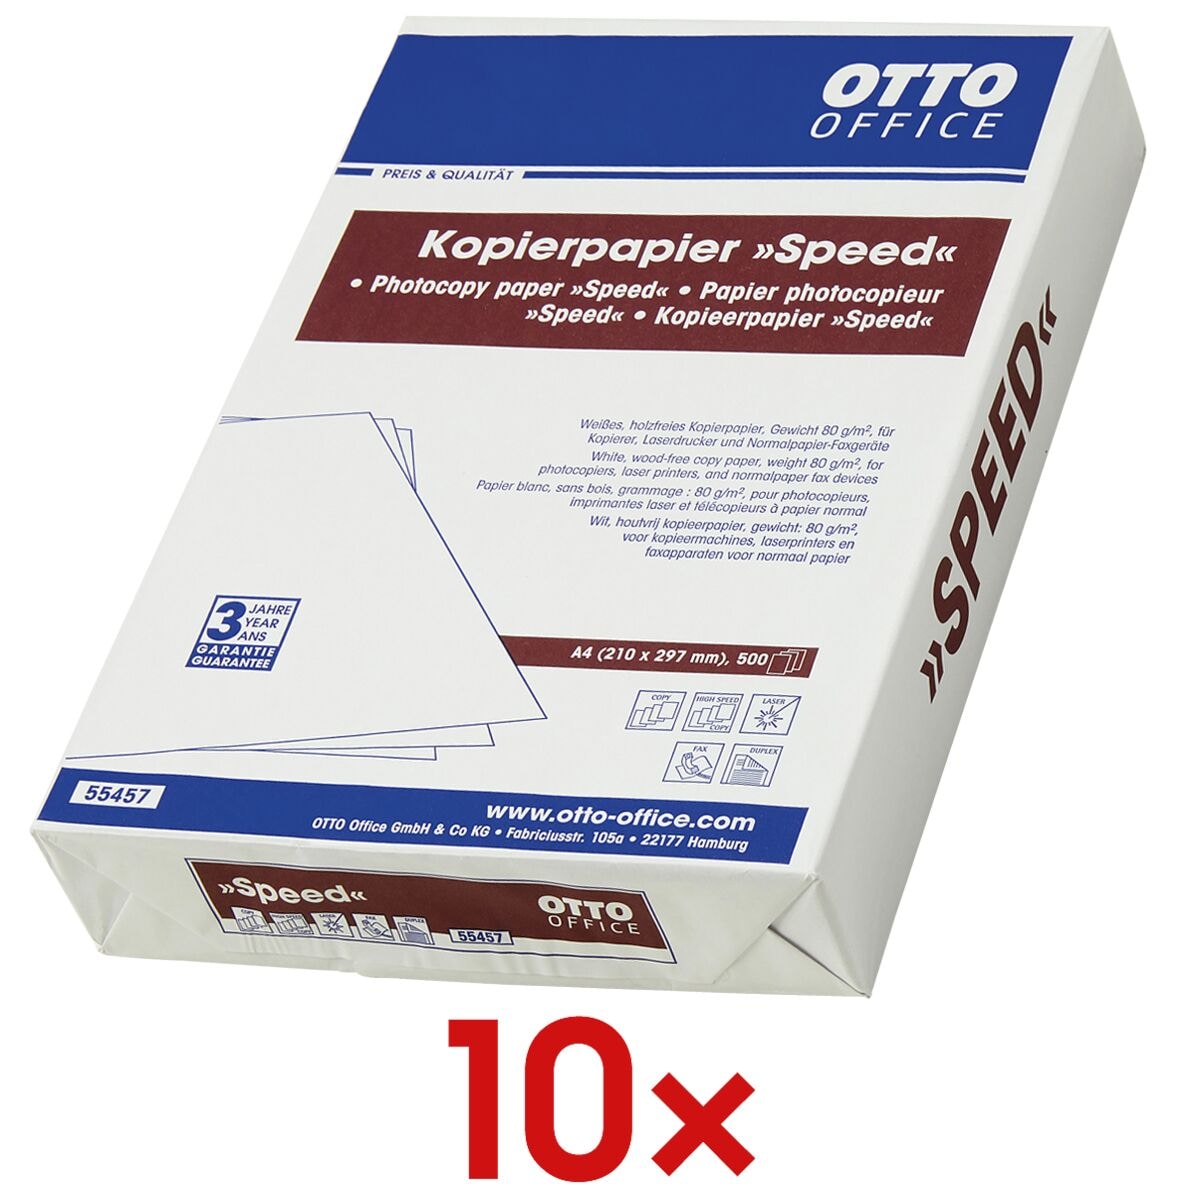 10x Kopieerpapier OTTO Office SPEED - 5000 bladen (totaal), 80g/qm